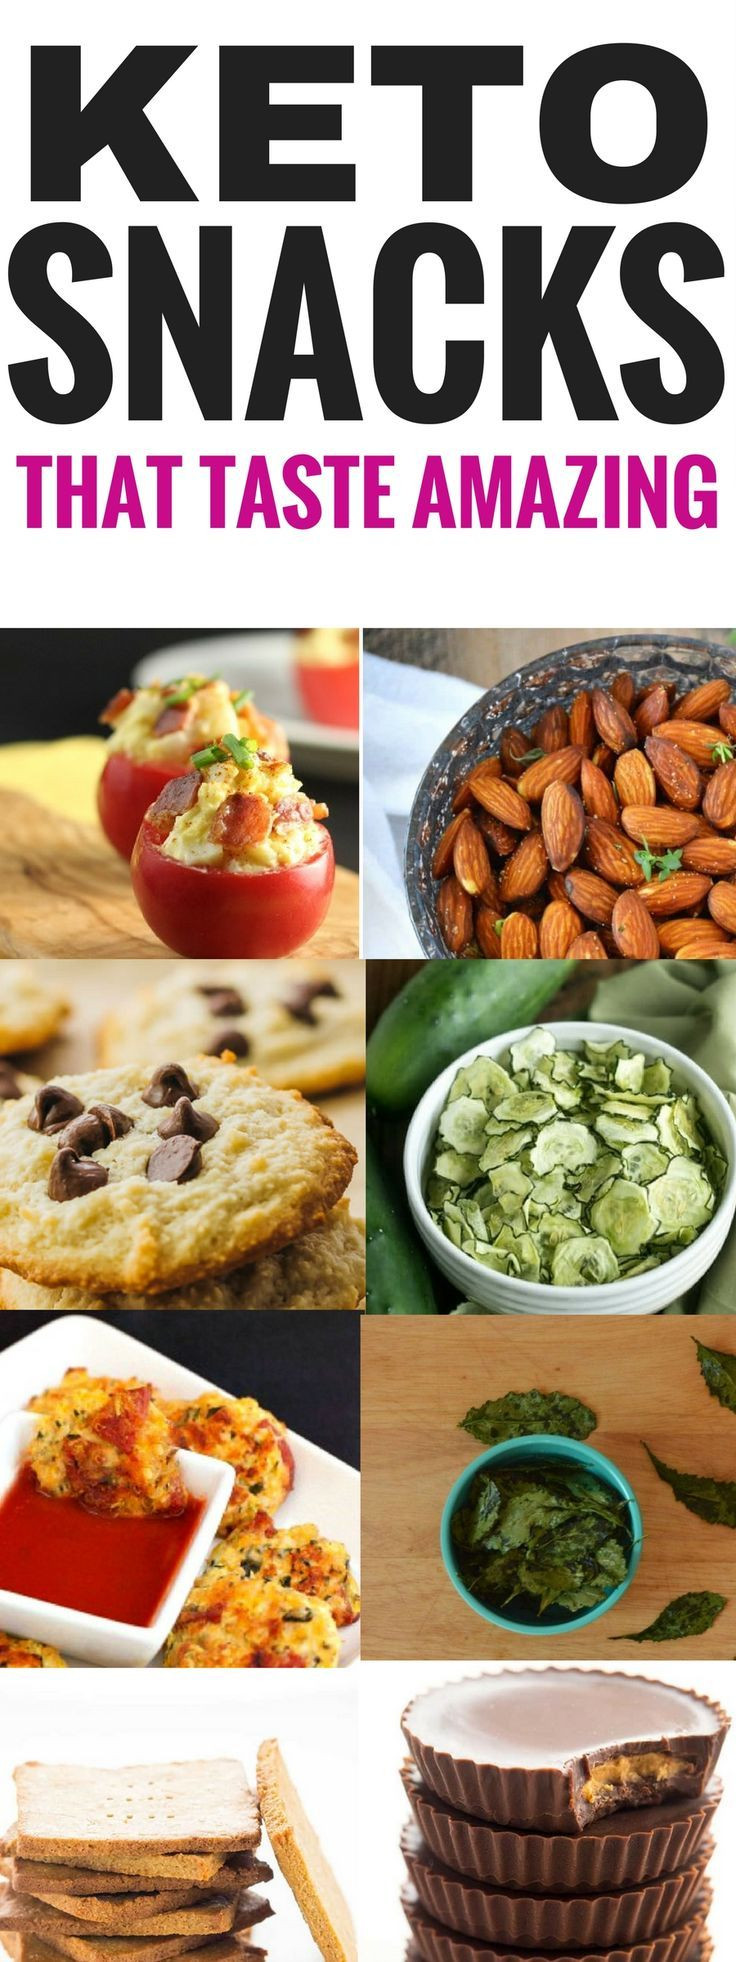 Healthy Keto Snacks
 Best 25 Keto snacks ideas on Pinterest